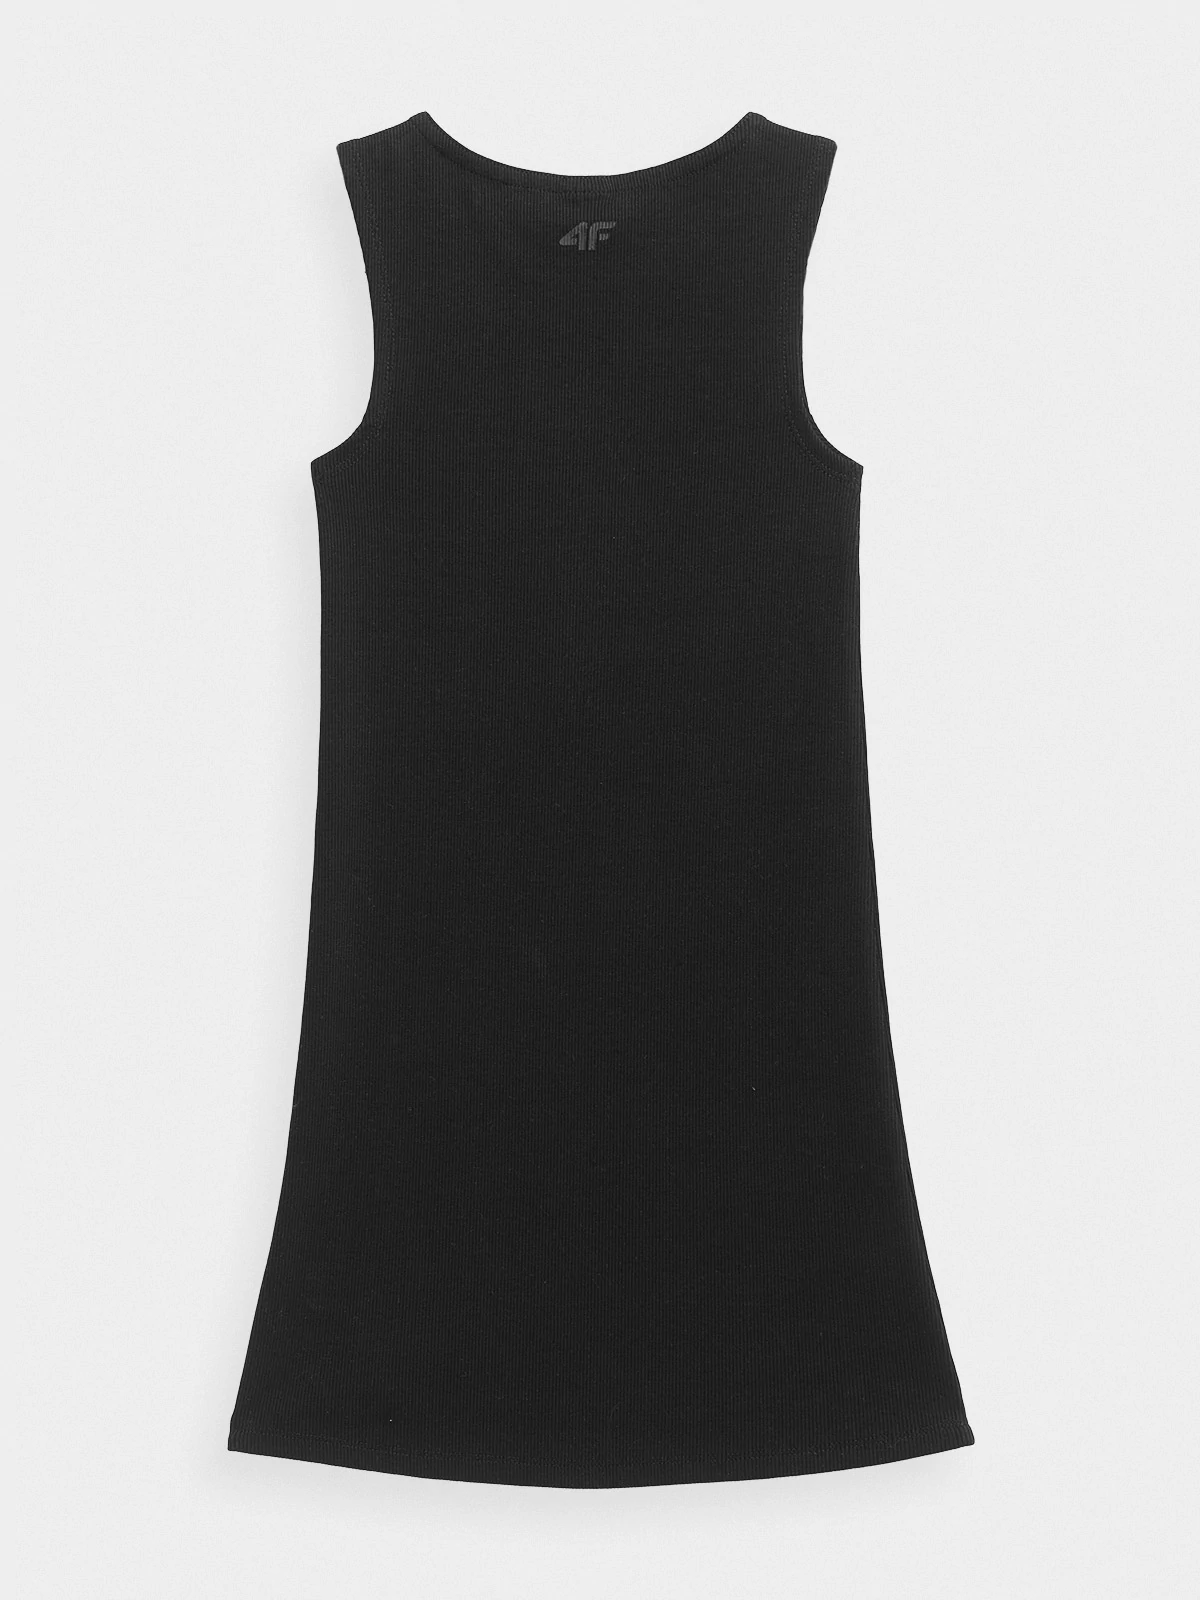 Girls' ribbed sleeveless dress colour black | 4F - Sportswear and Footwear